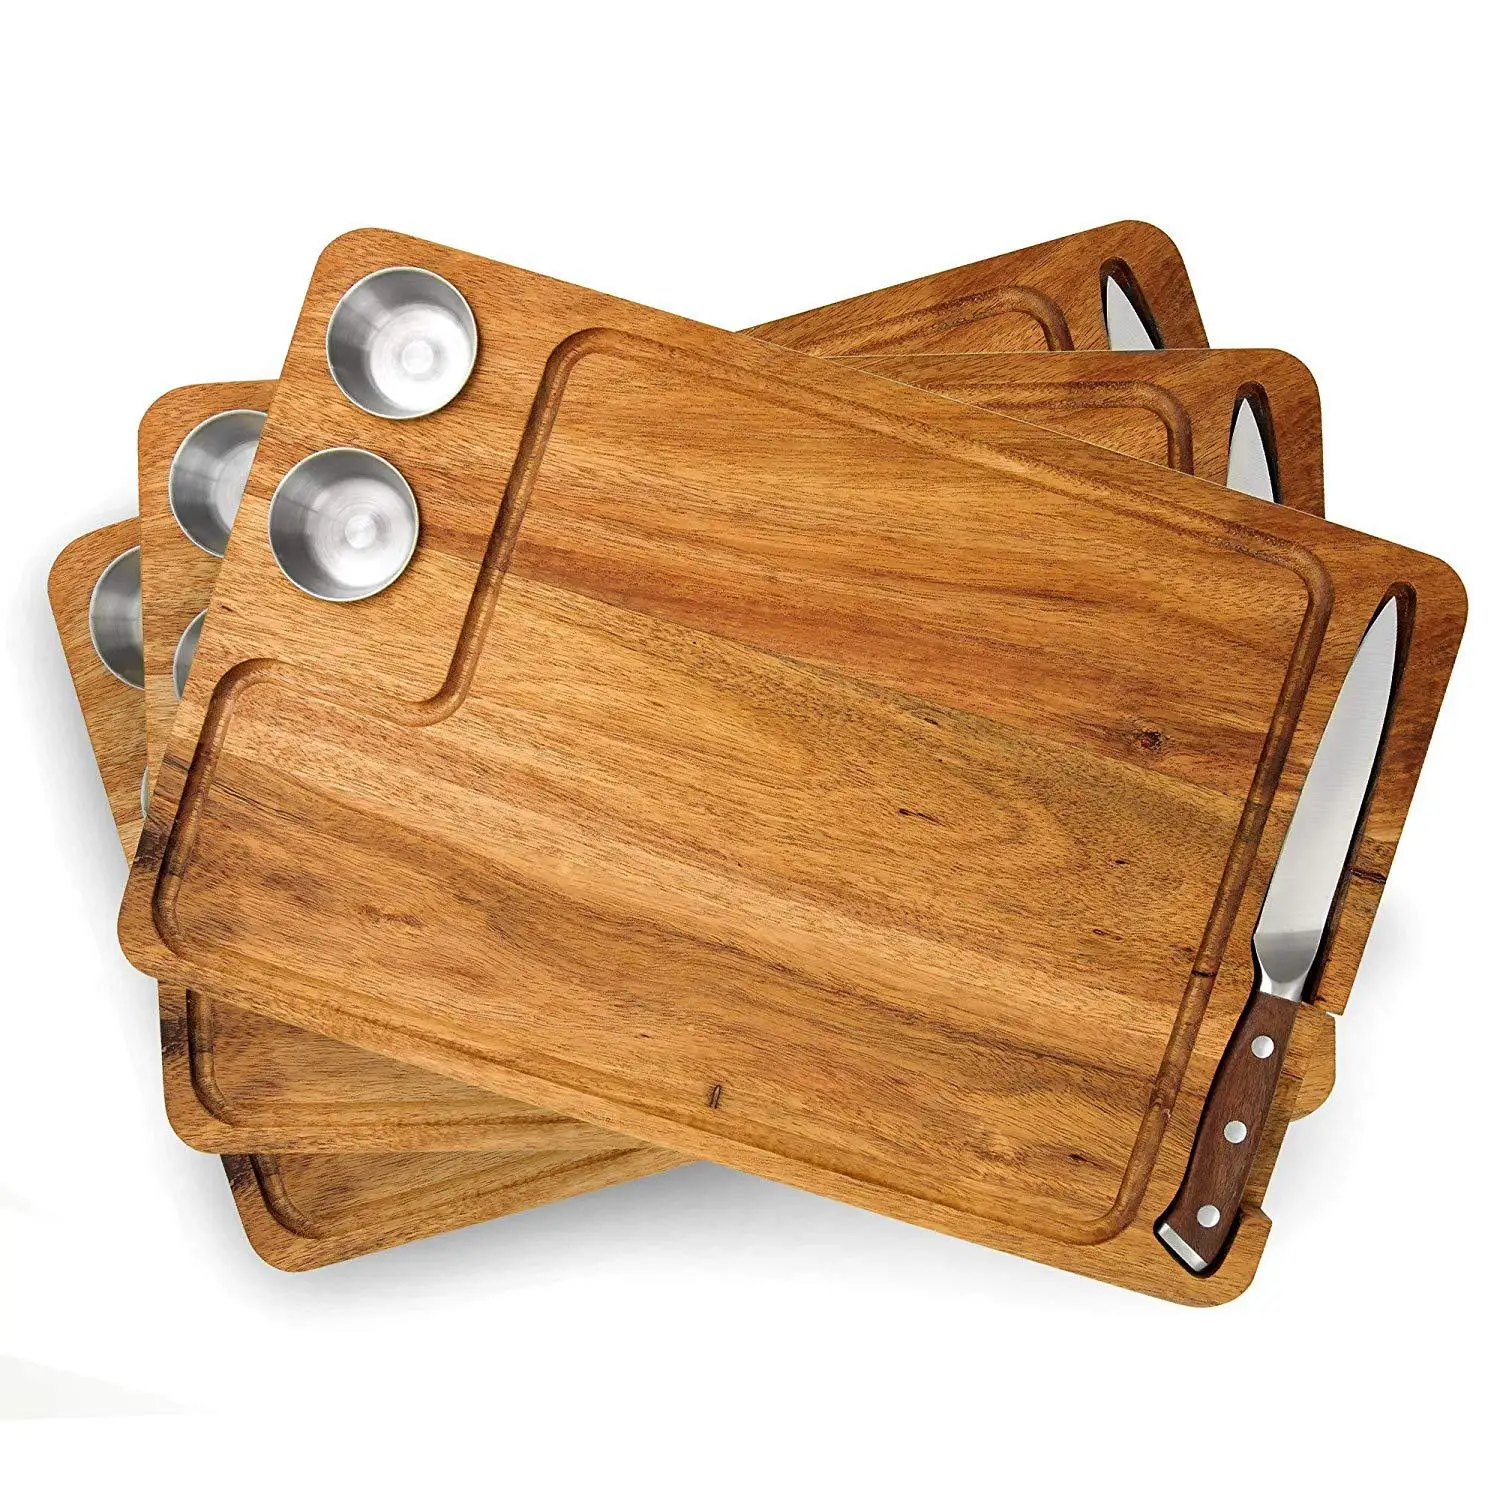 

Wooden Chopping board Pizza steak chopping board with steak knife and Seasoning bowl, Acacia wood grain